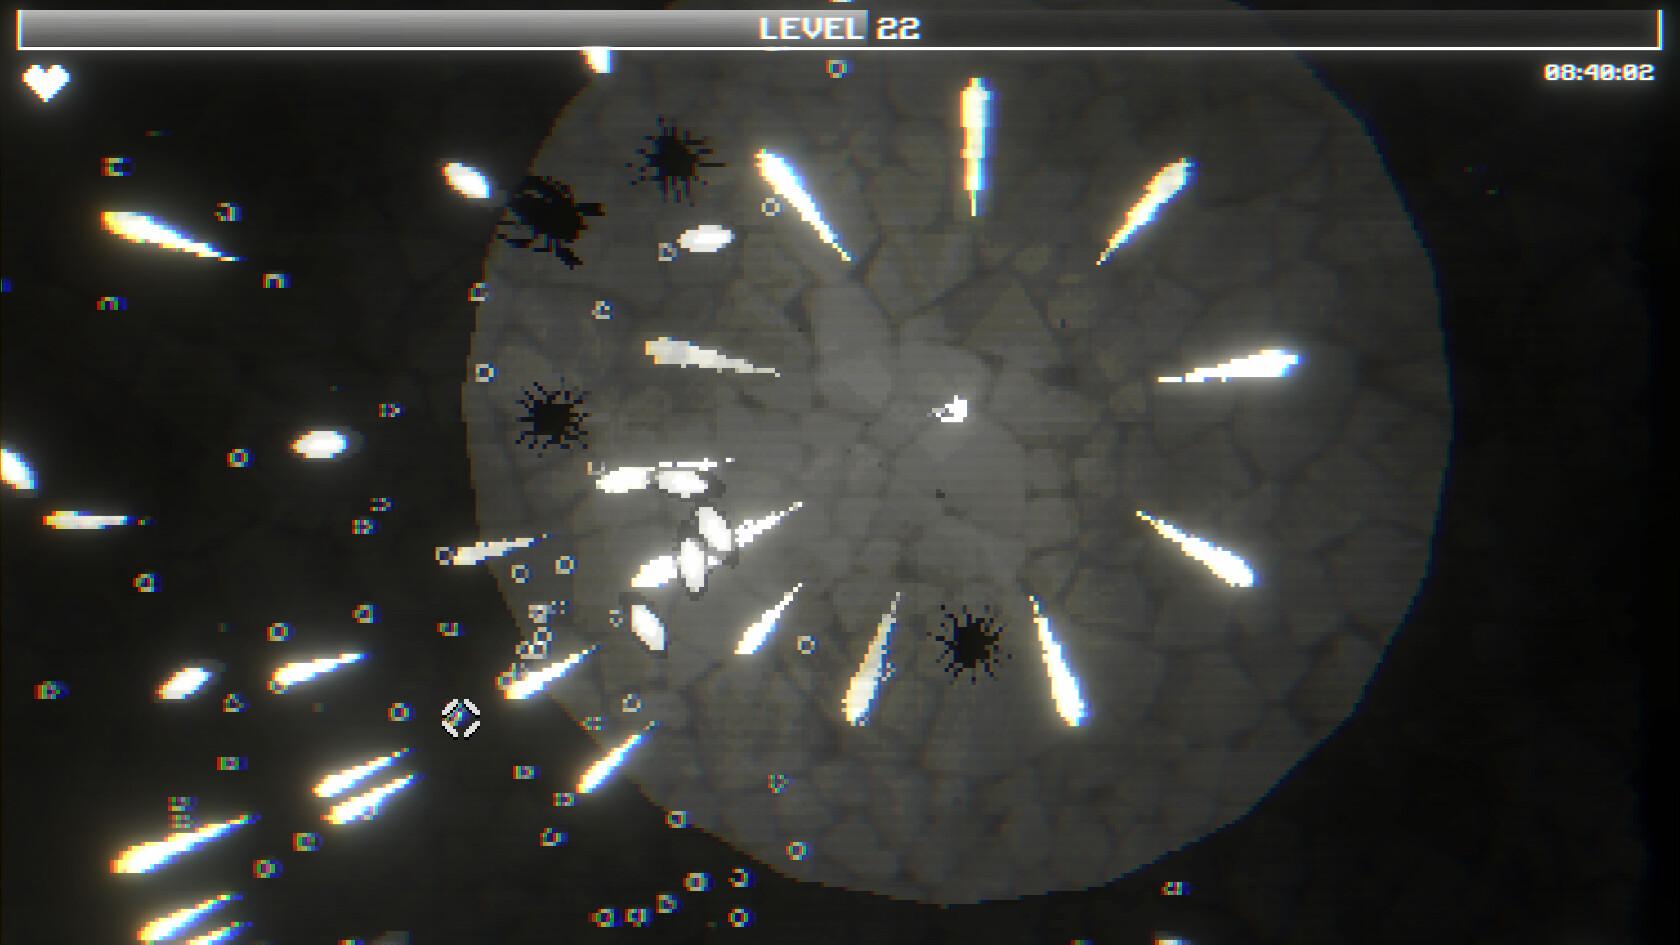 Screenshot №8 from game Disfigure